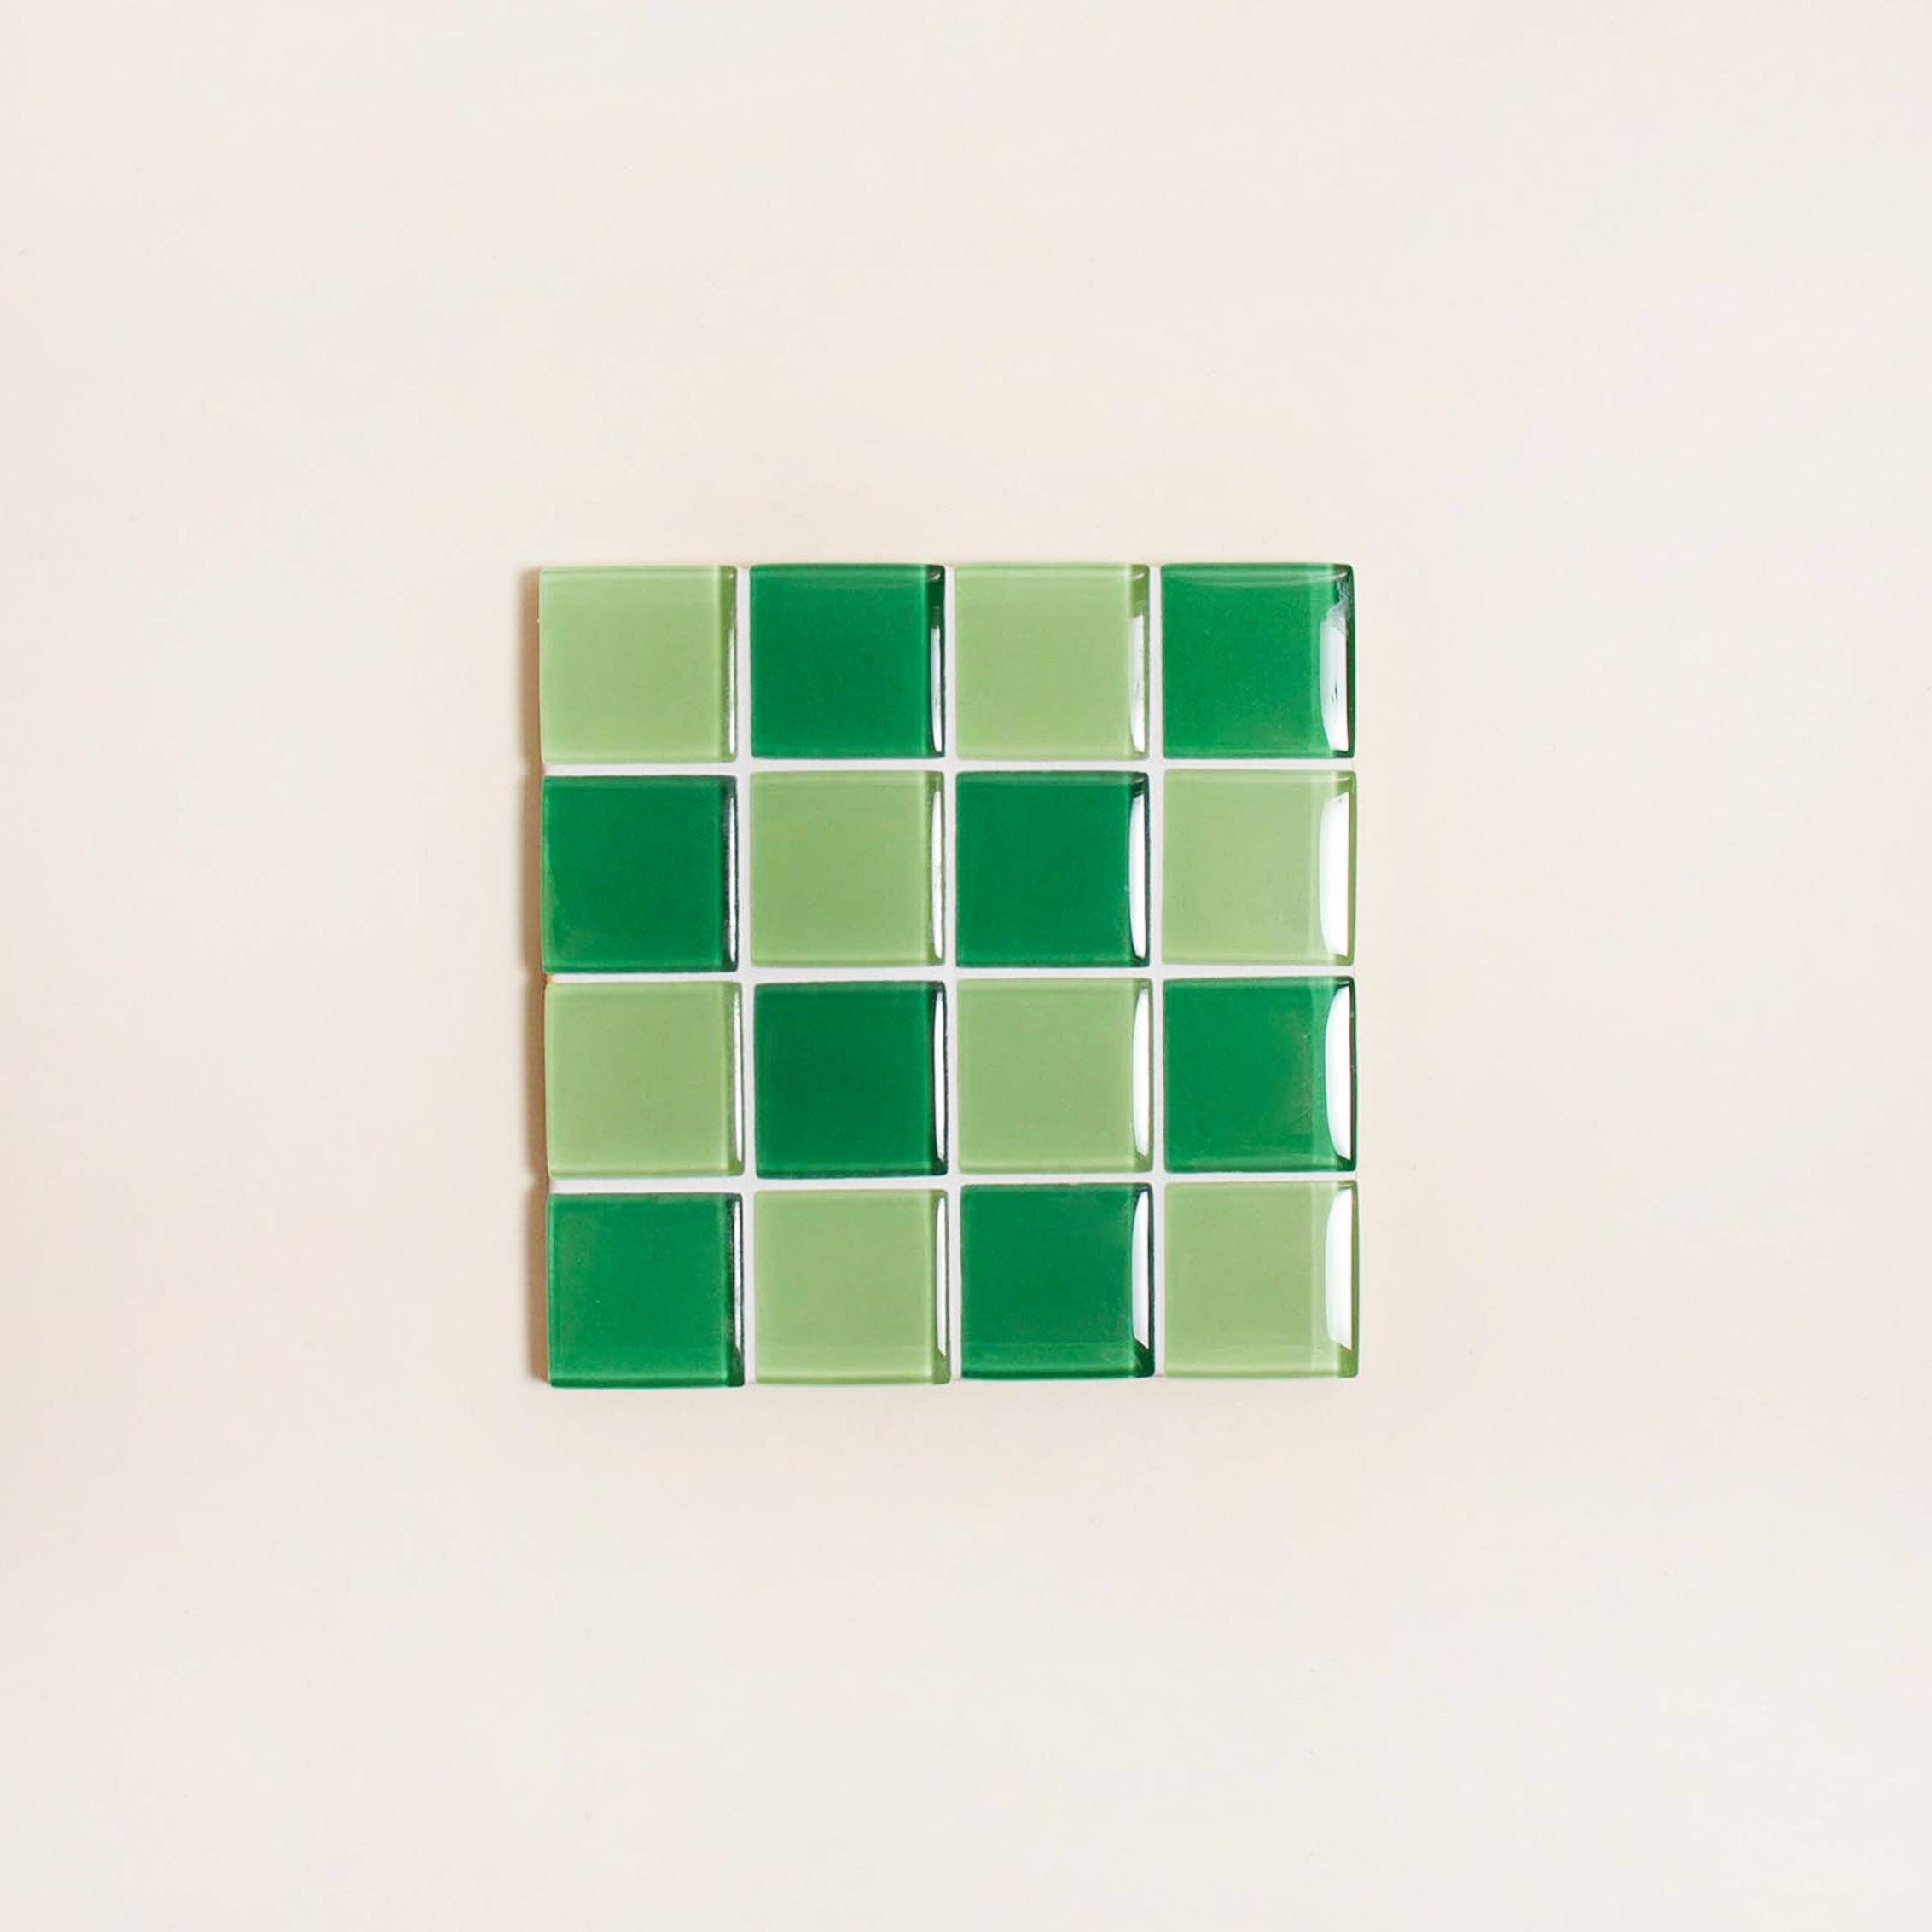 GLASS TILE COASTER - Green Apple by Subtle Art Studios